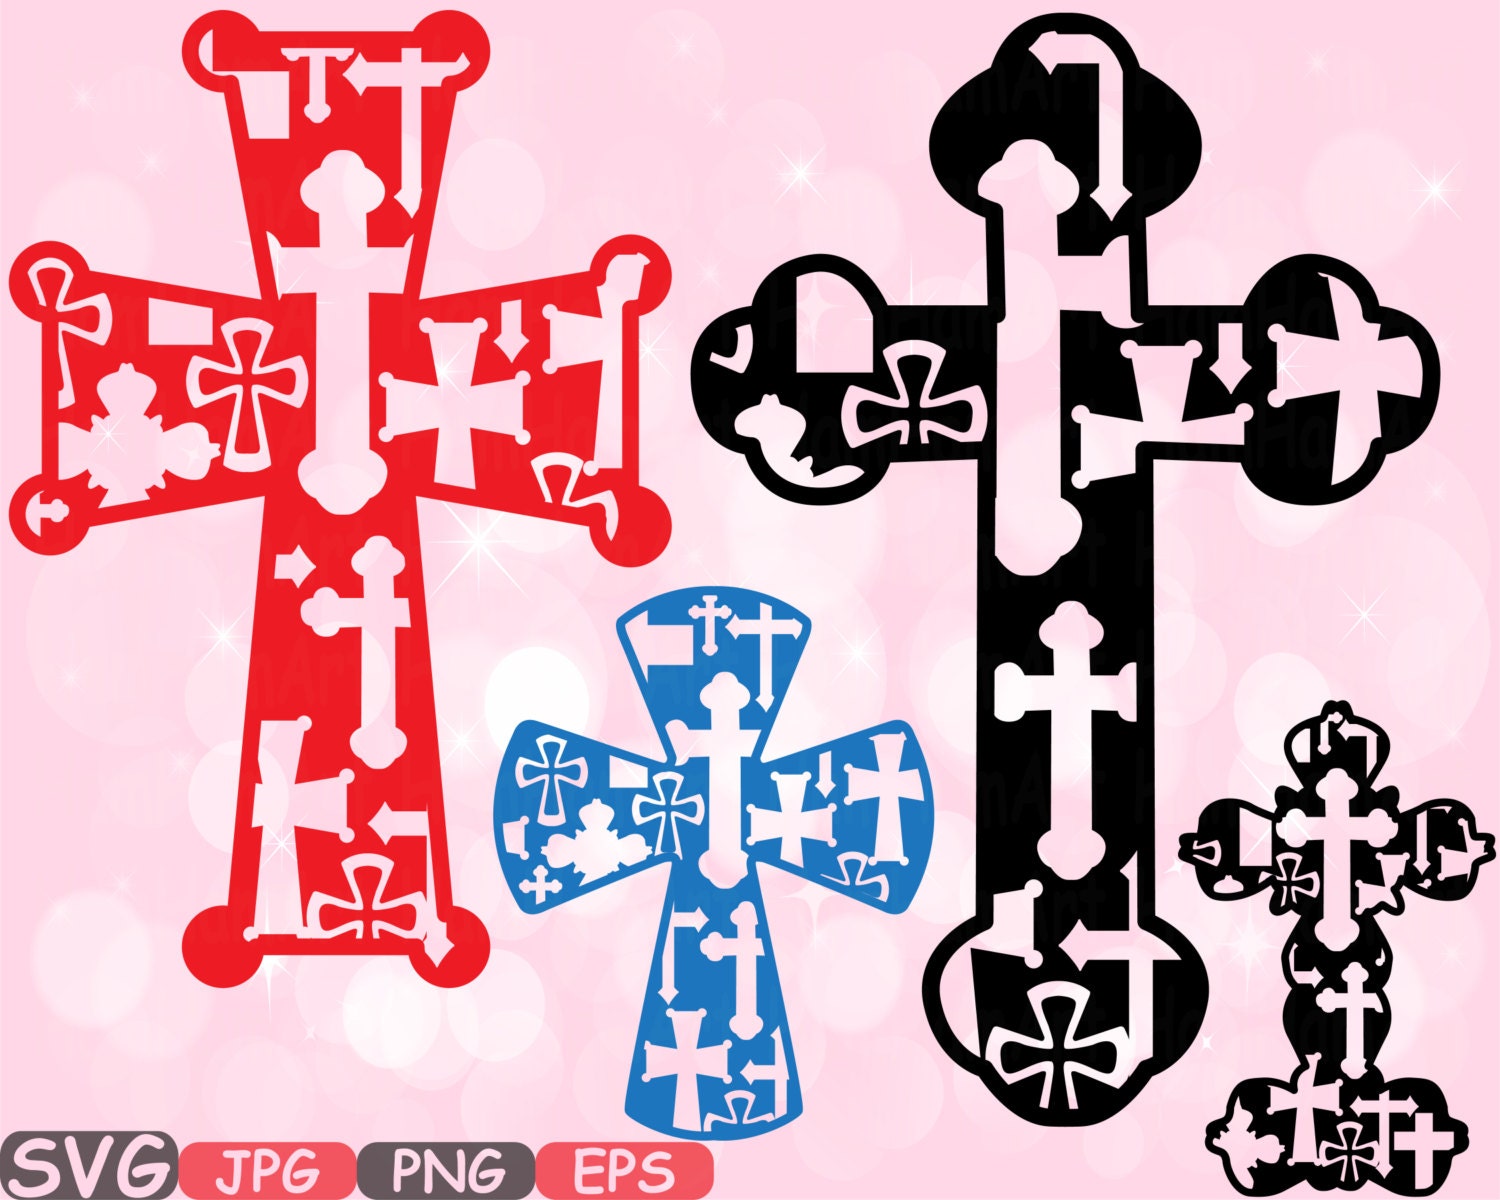 Download Christian Cross SVG Silhouette Cutting Files Jesus Cross